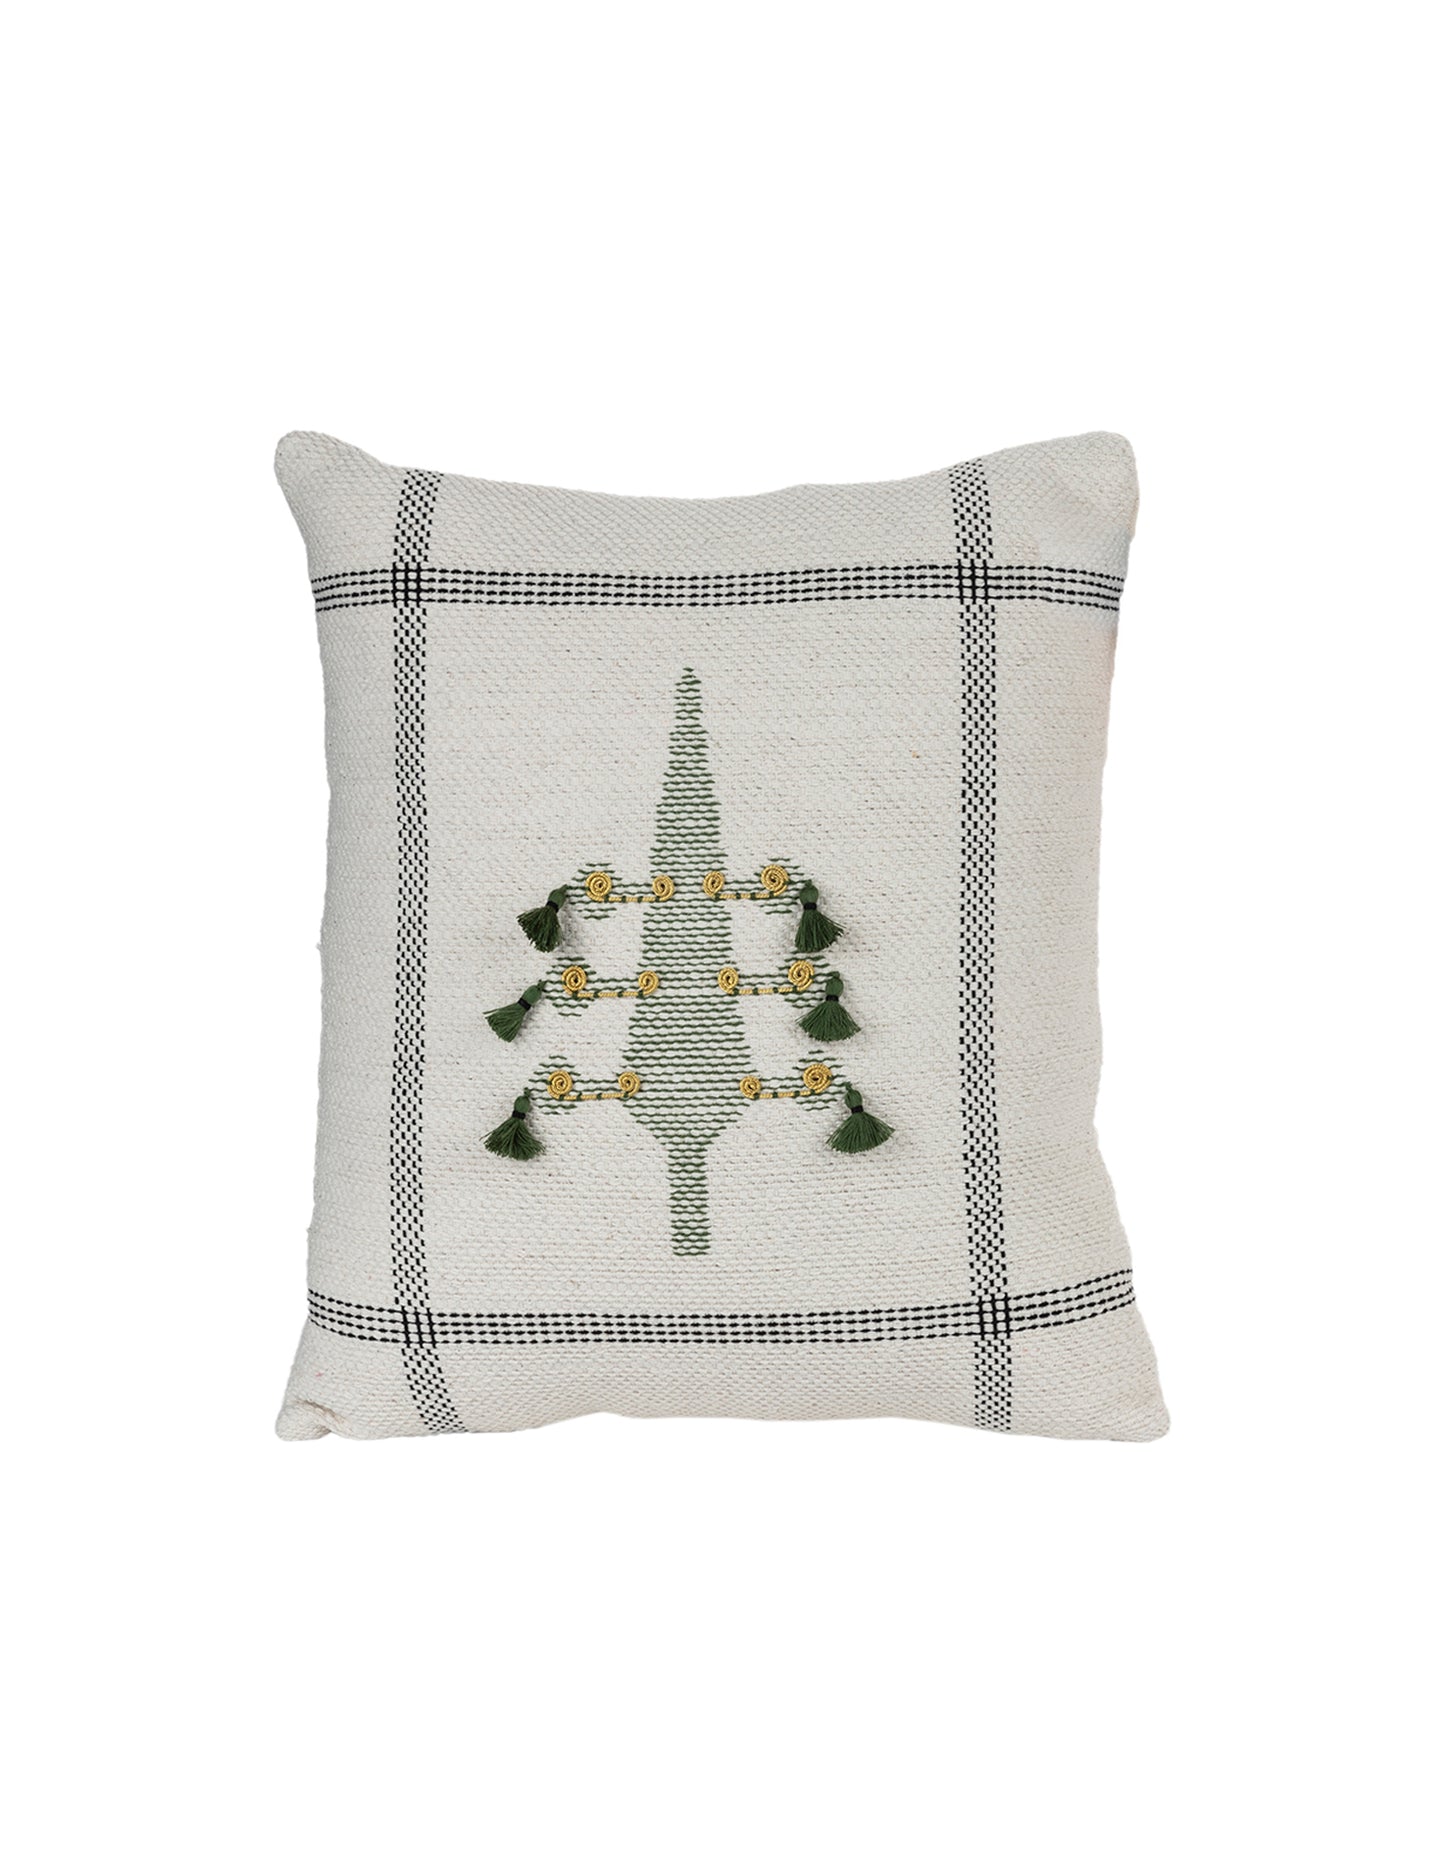 Hand-knit kilim cedar design cushion cover